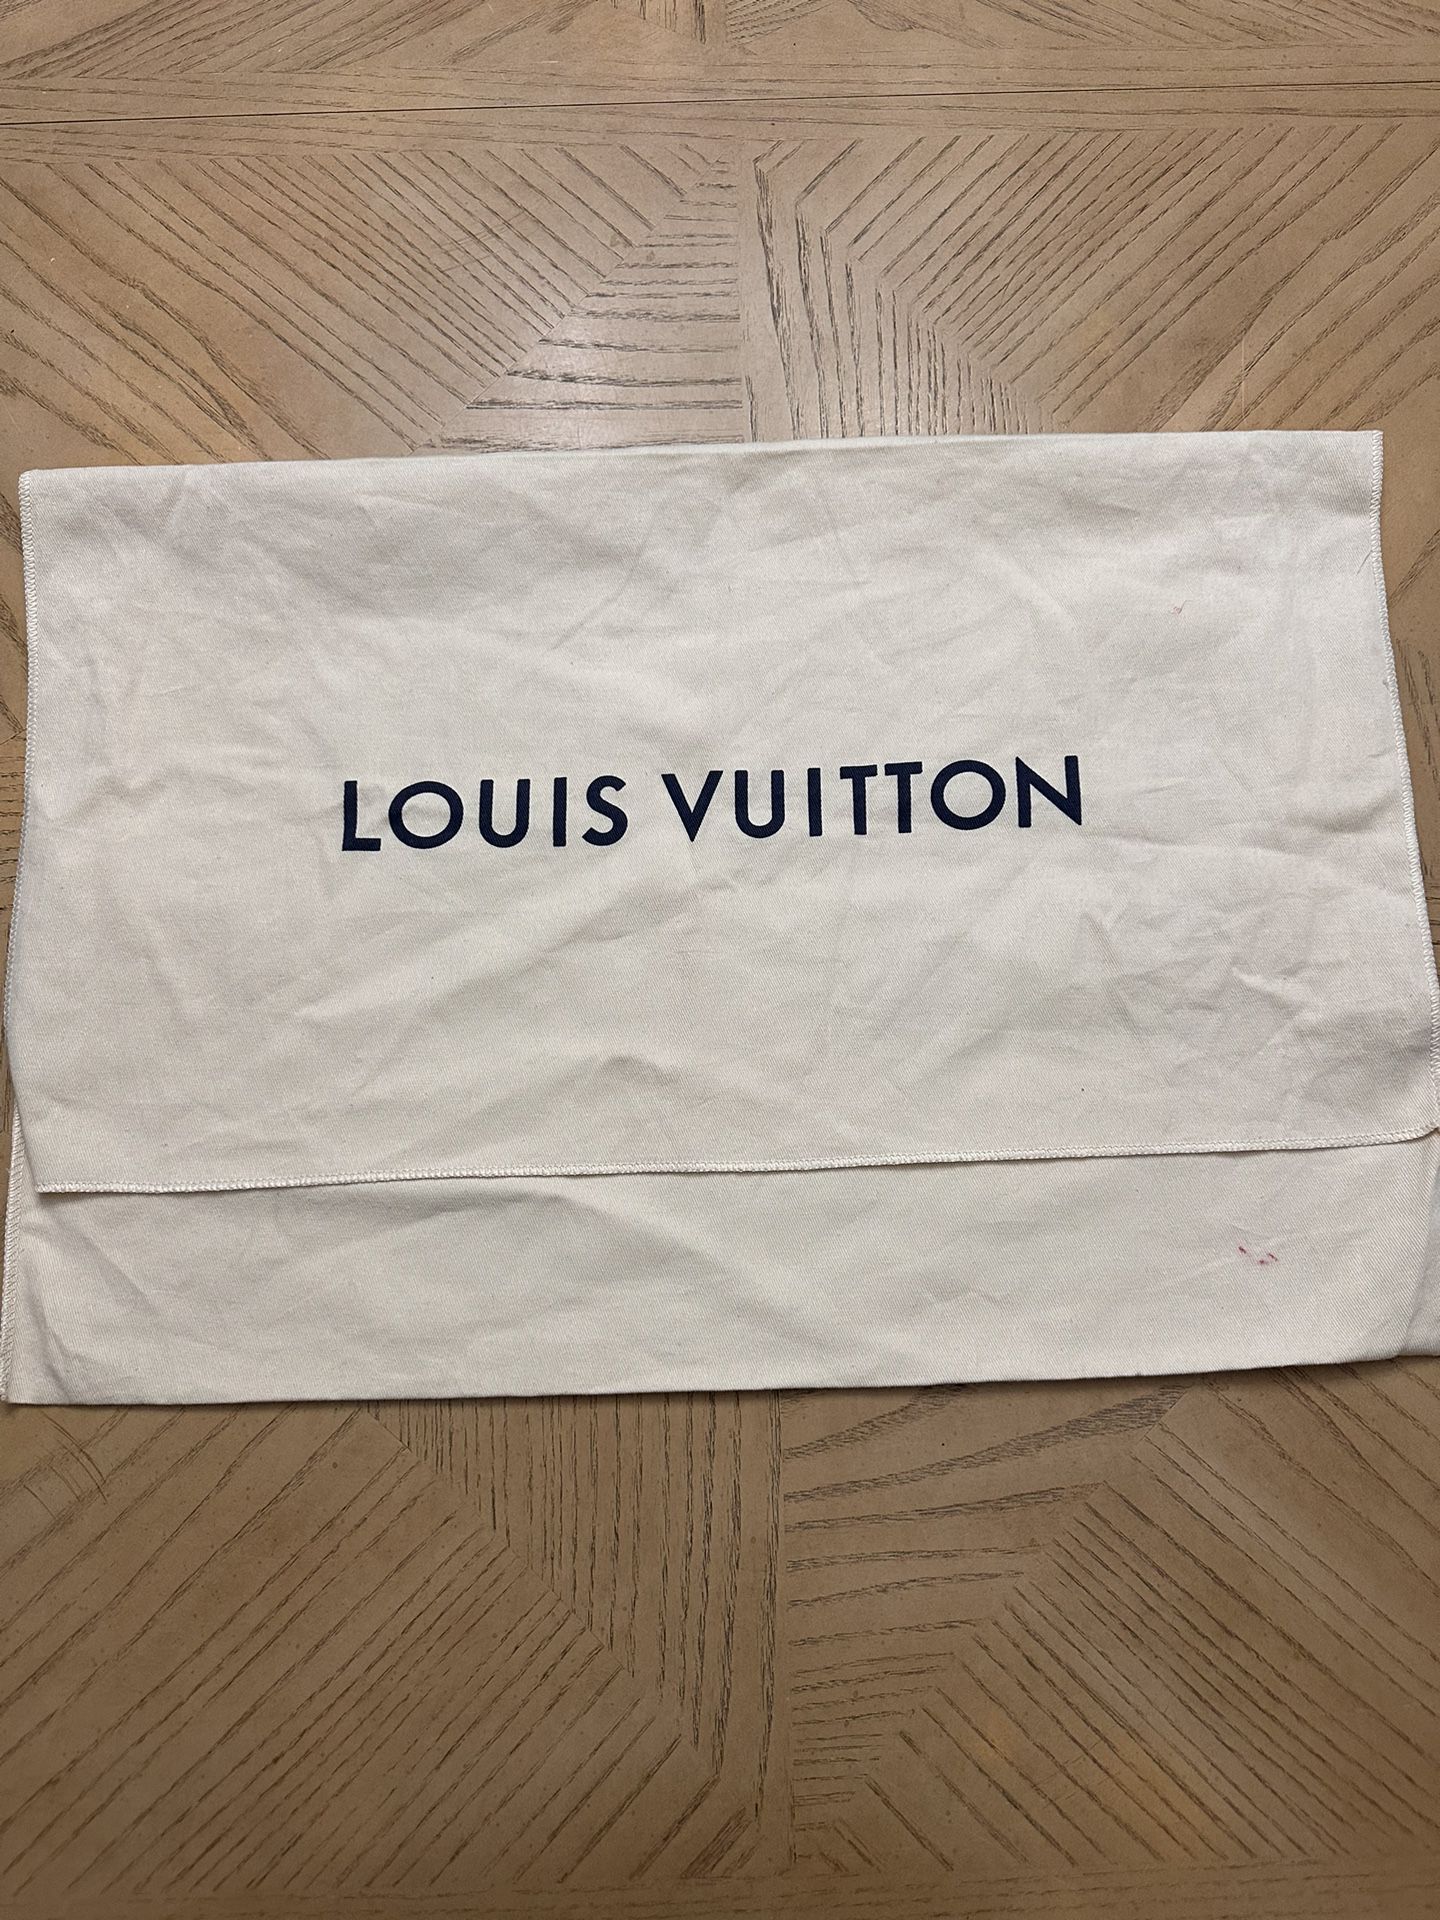 LOUIS VUITTON FLAP OVER DUST COVER DUST BAG  22”x15” Few marks